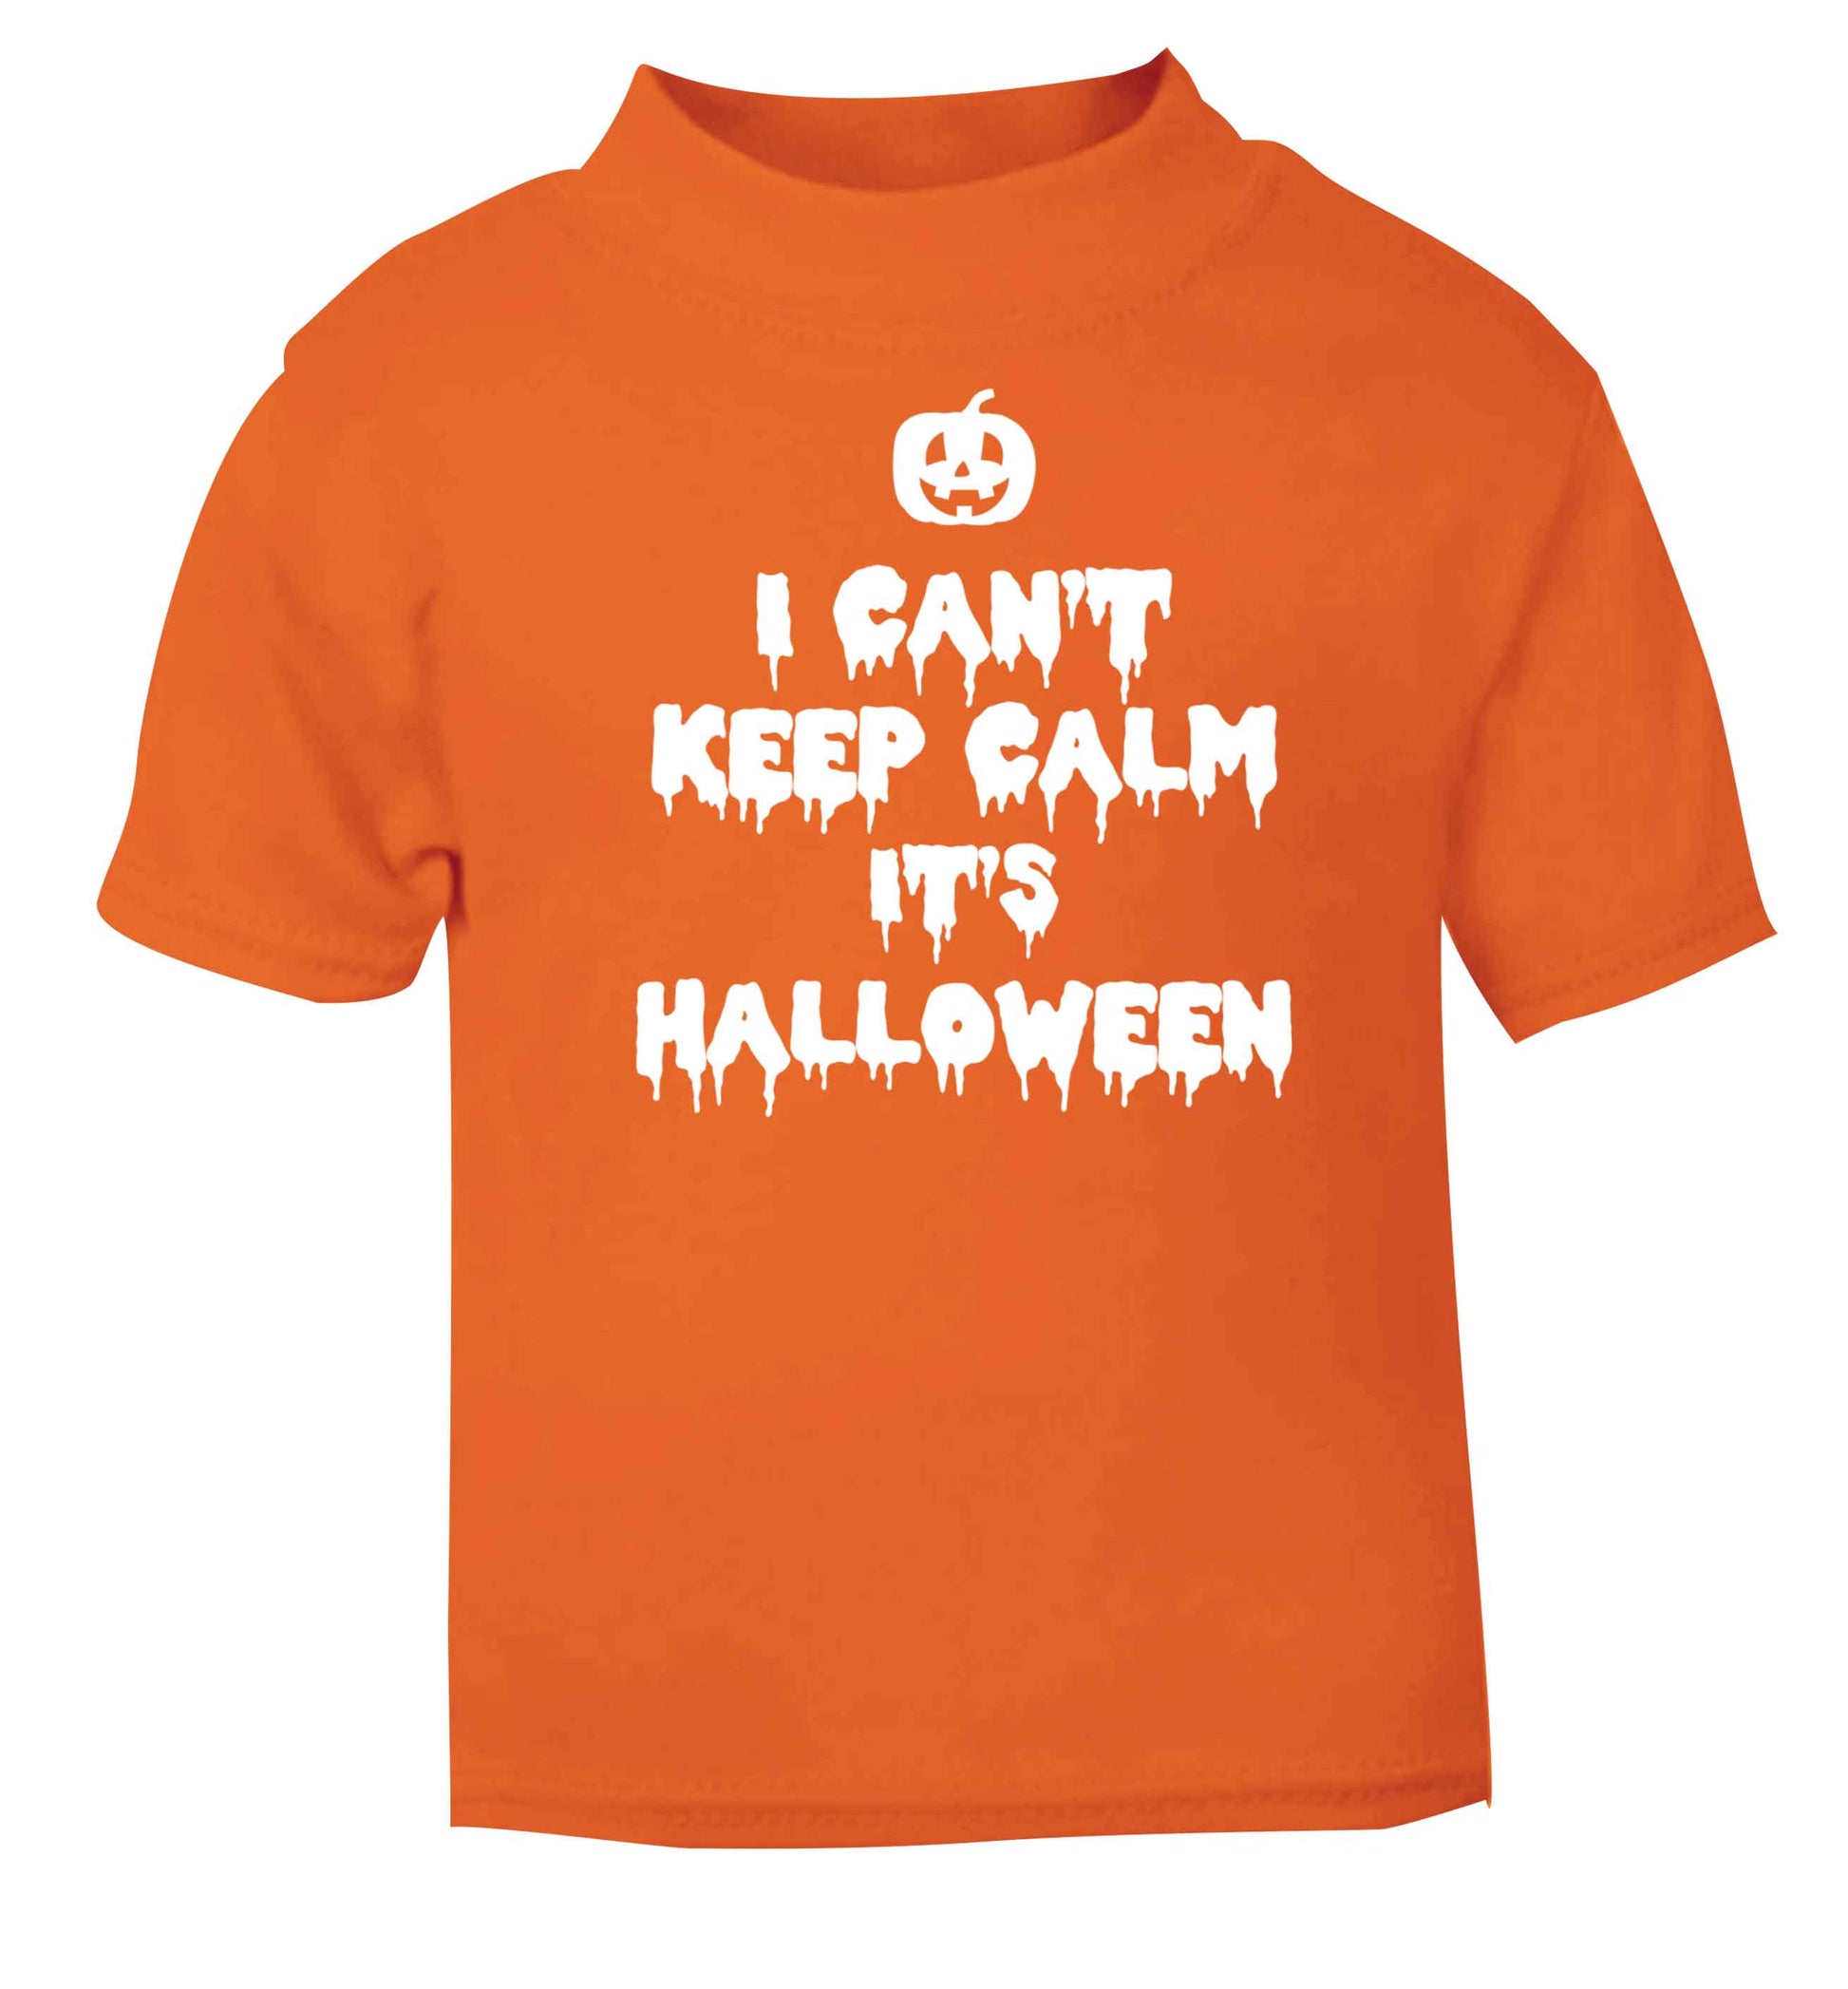 I can't keep calm it's halloween orange baby toddler Tshirt 2 Years